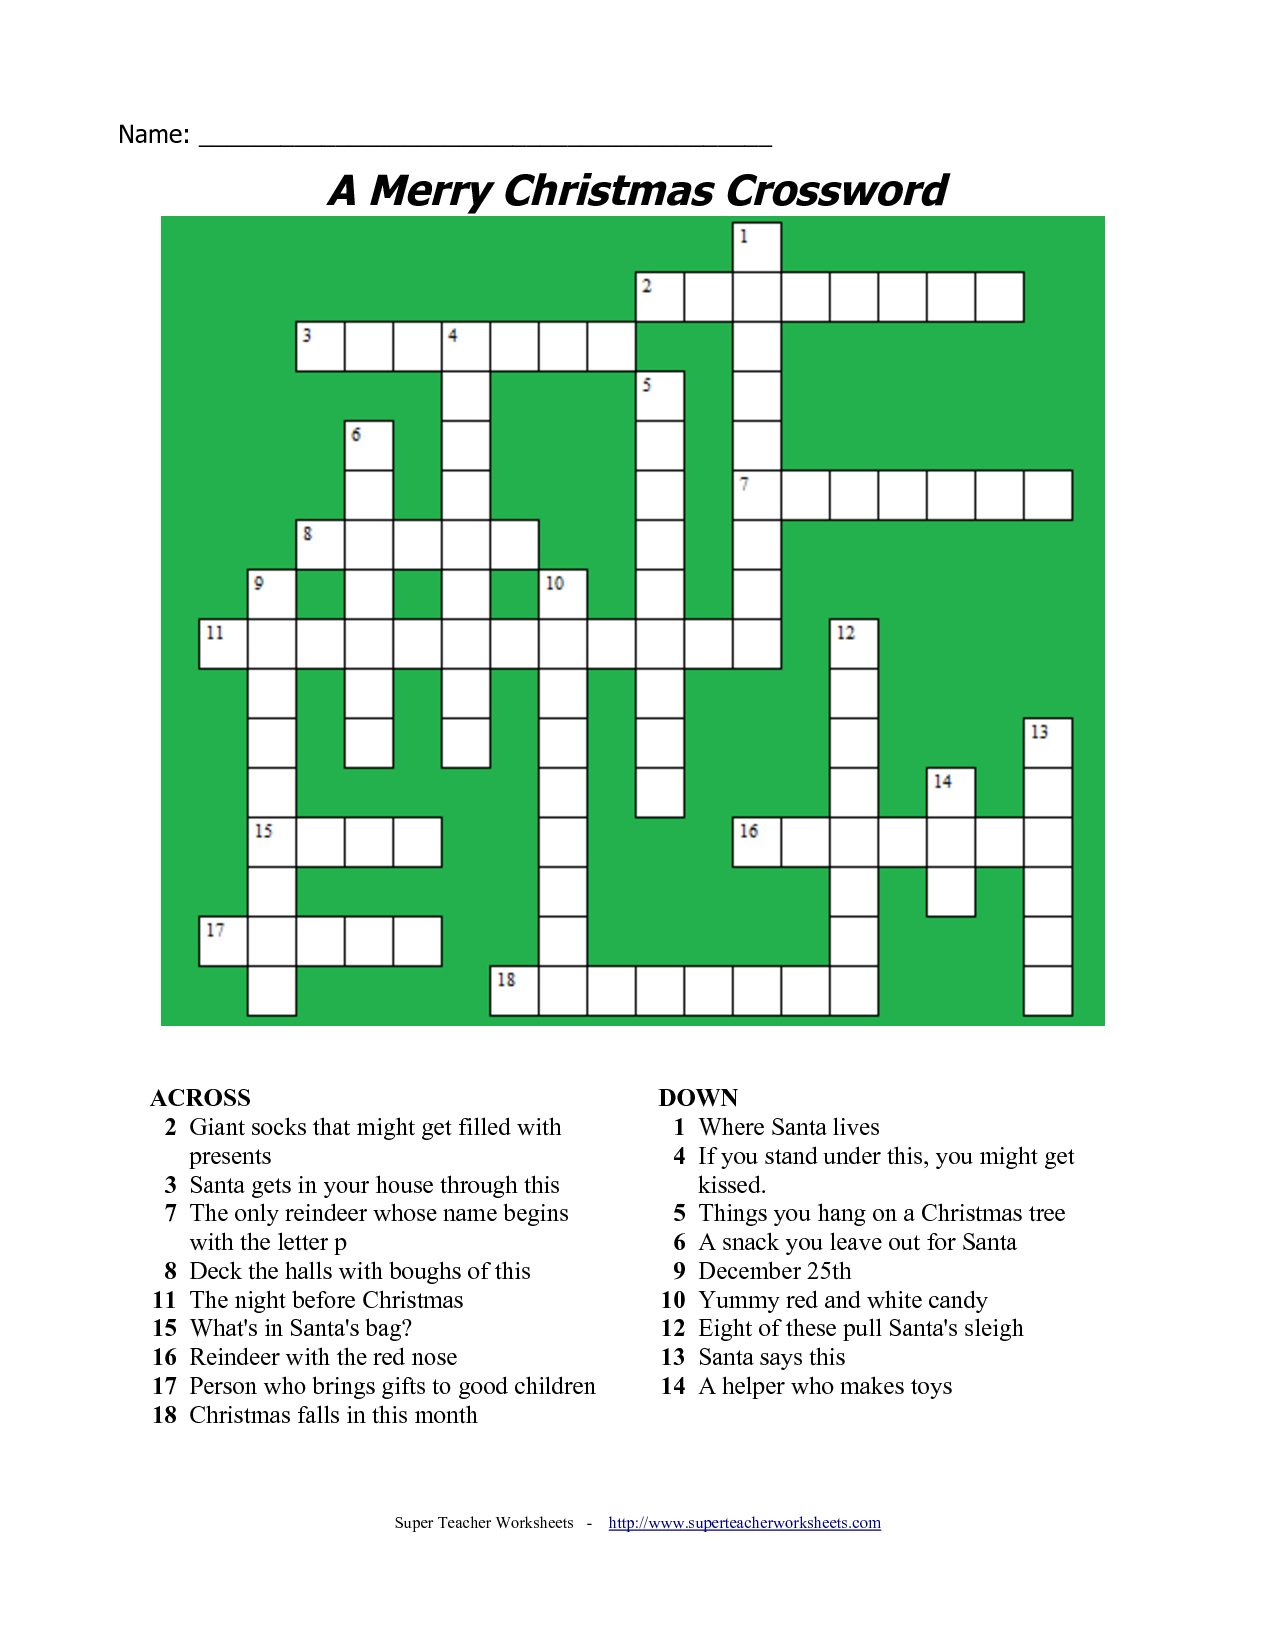 20 Fun Printable Christmas Crossword Puzzles | Kittybabylove - Free Printable Xmas Crossword